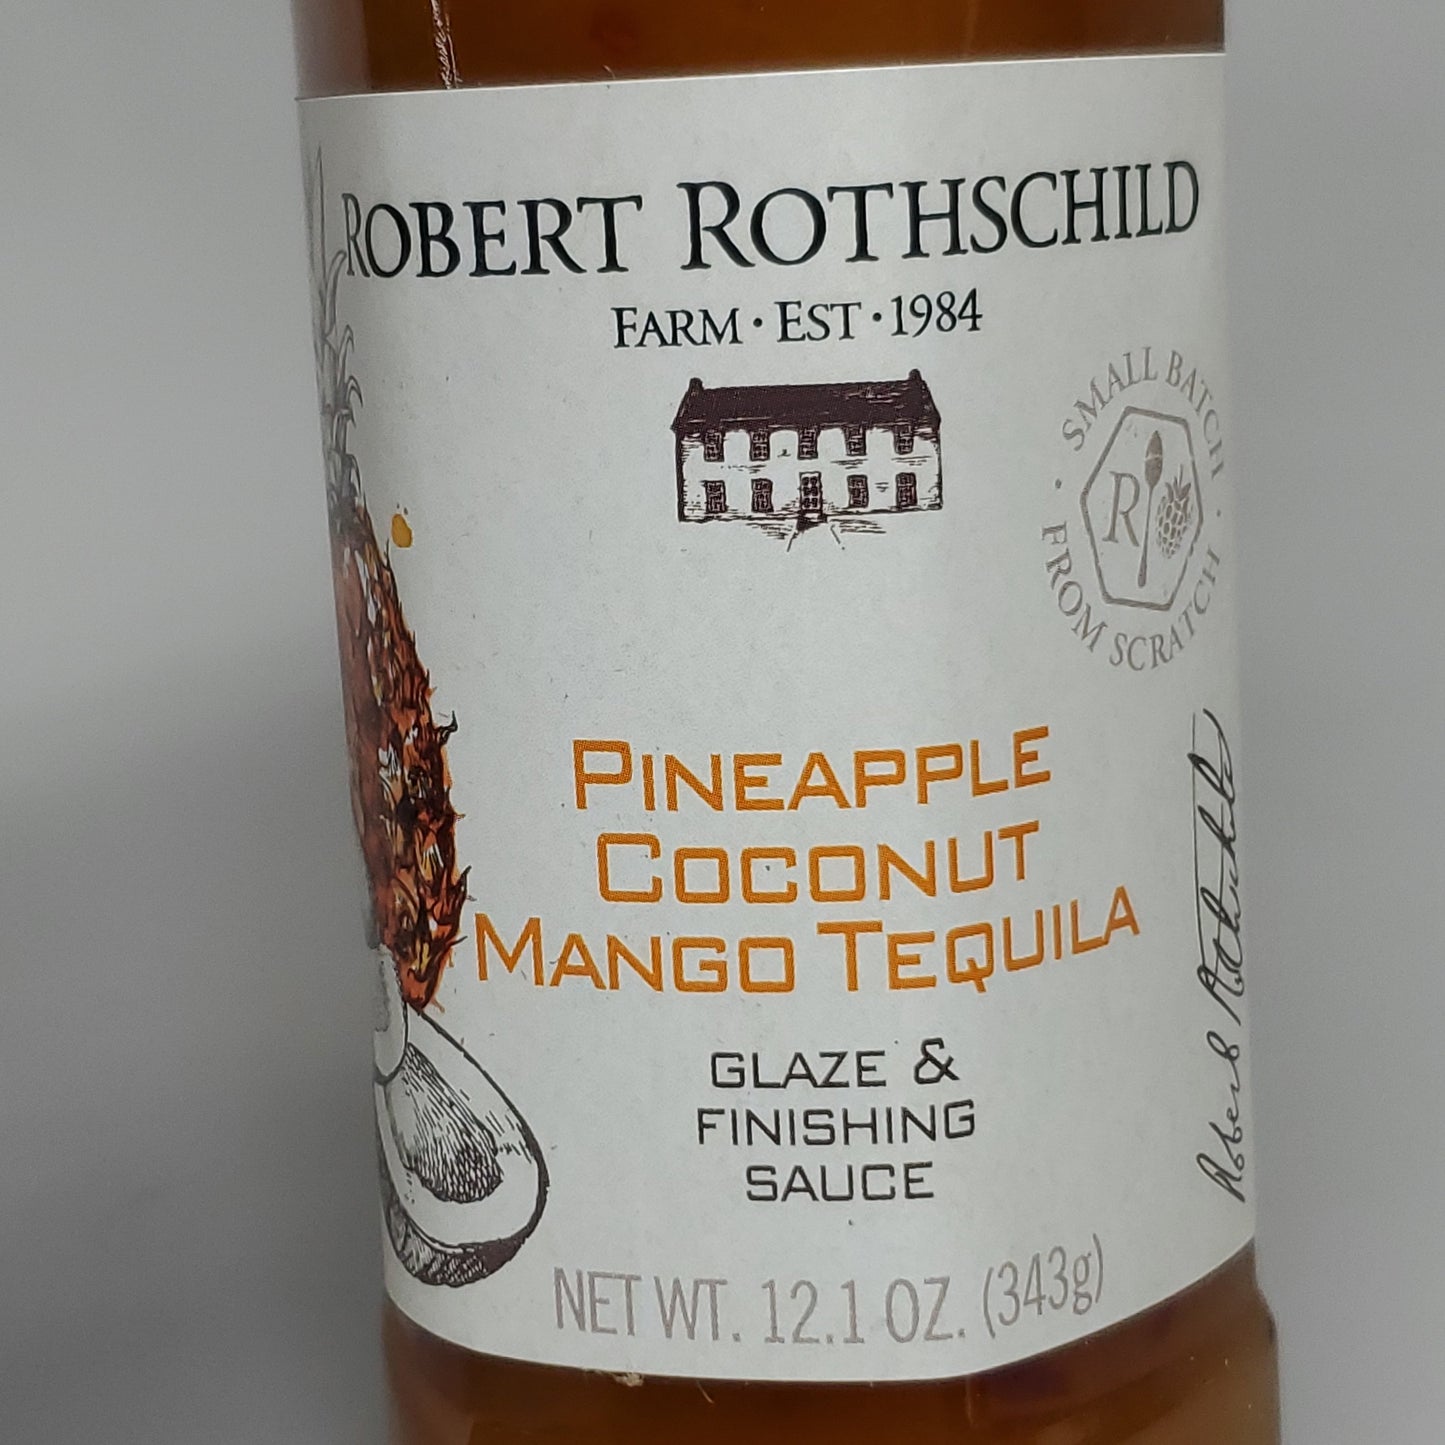 ZA@ ROBERT ROTHSCHILD 6-PK of Pineapple Coconut Mango Tequila Glaze & Finishing Sauce 12.1 Oz 06/23 B